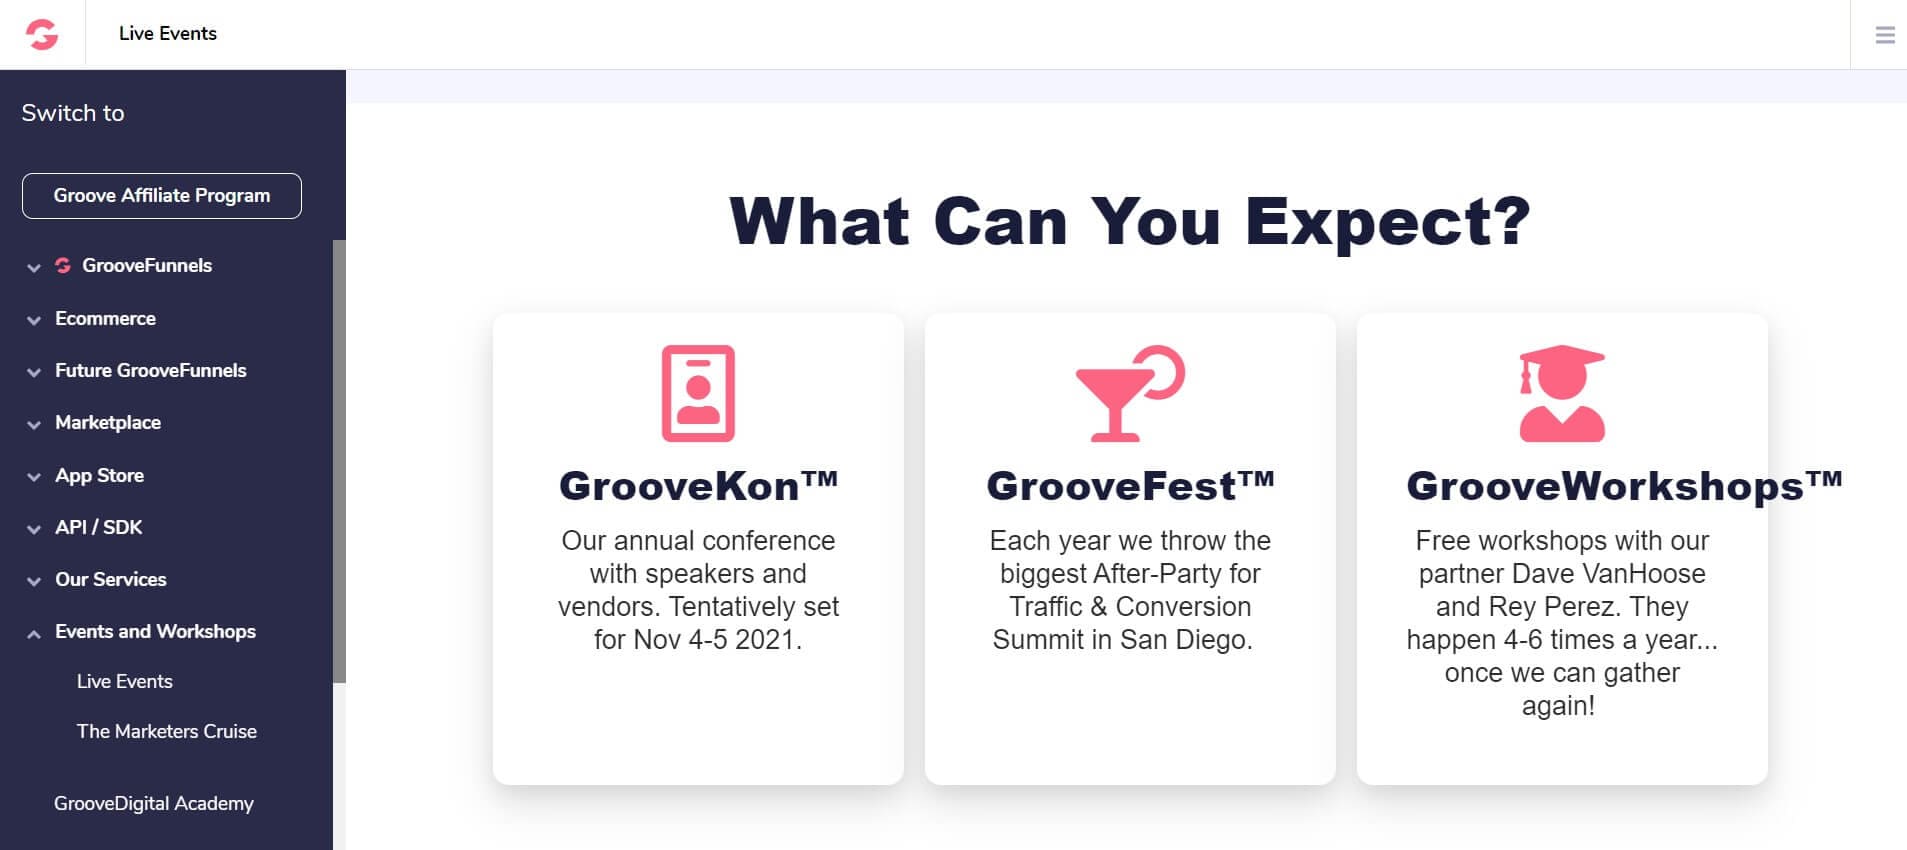 GrooveFunnels, GrooveKon, GrooveFest, and GrooveWorkshops